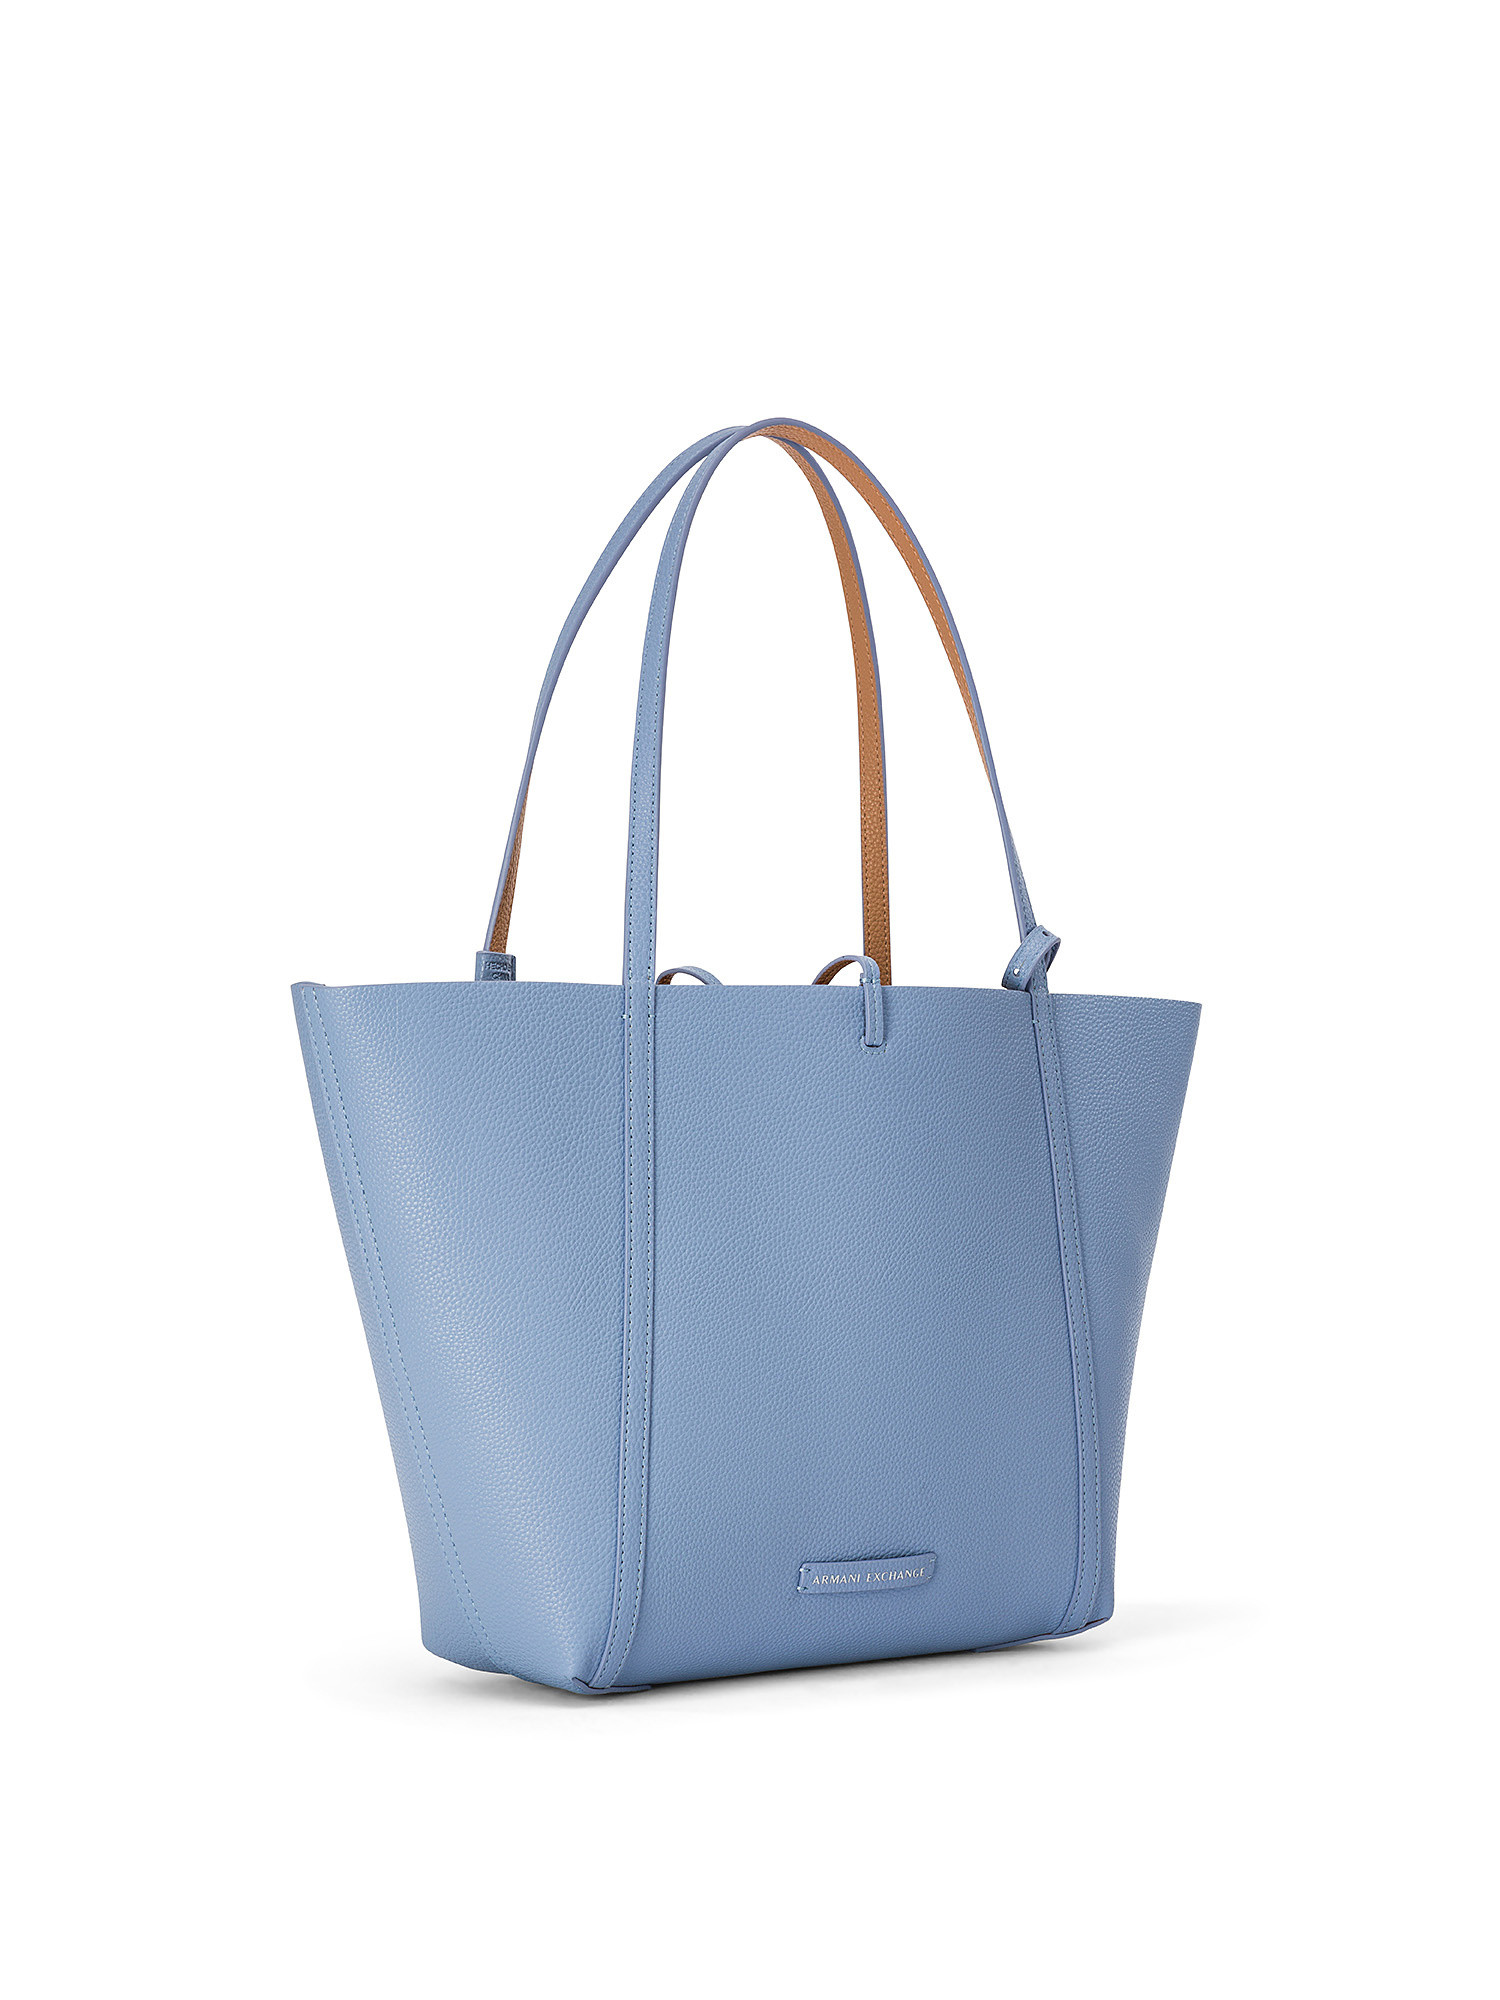 Armani Exchange - Tote bag reversibile con logo, Azzurro, large image number 1